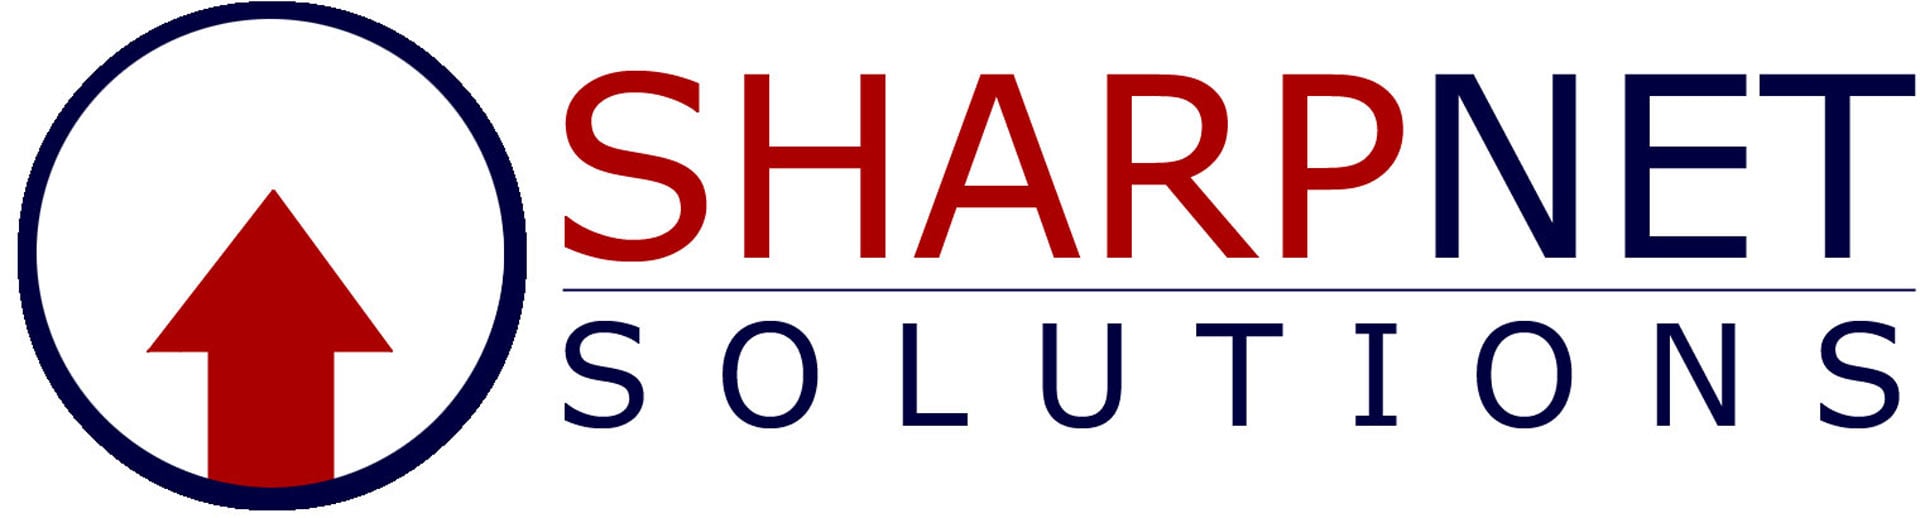 Top Local Online Marketing Agency Logo: SharpNet